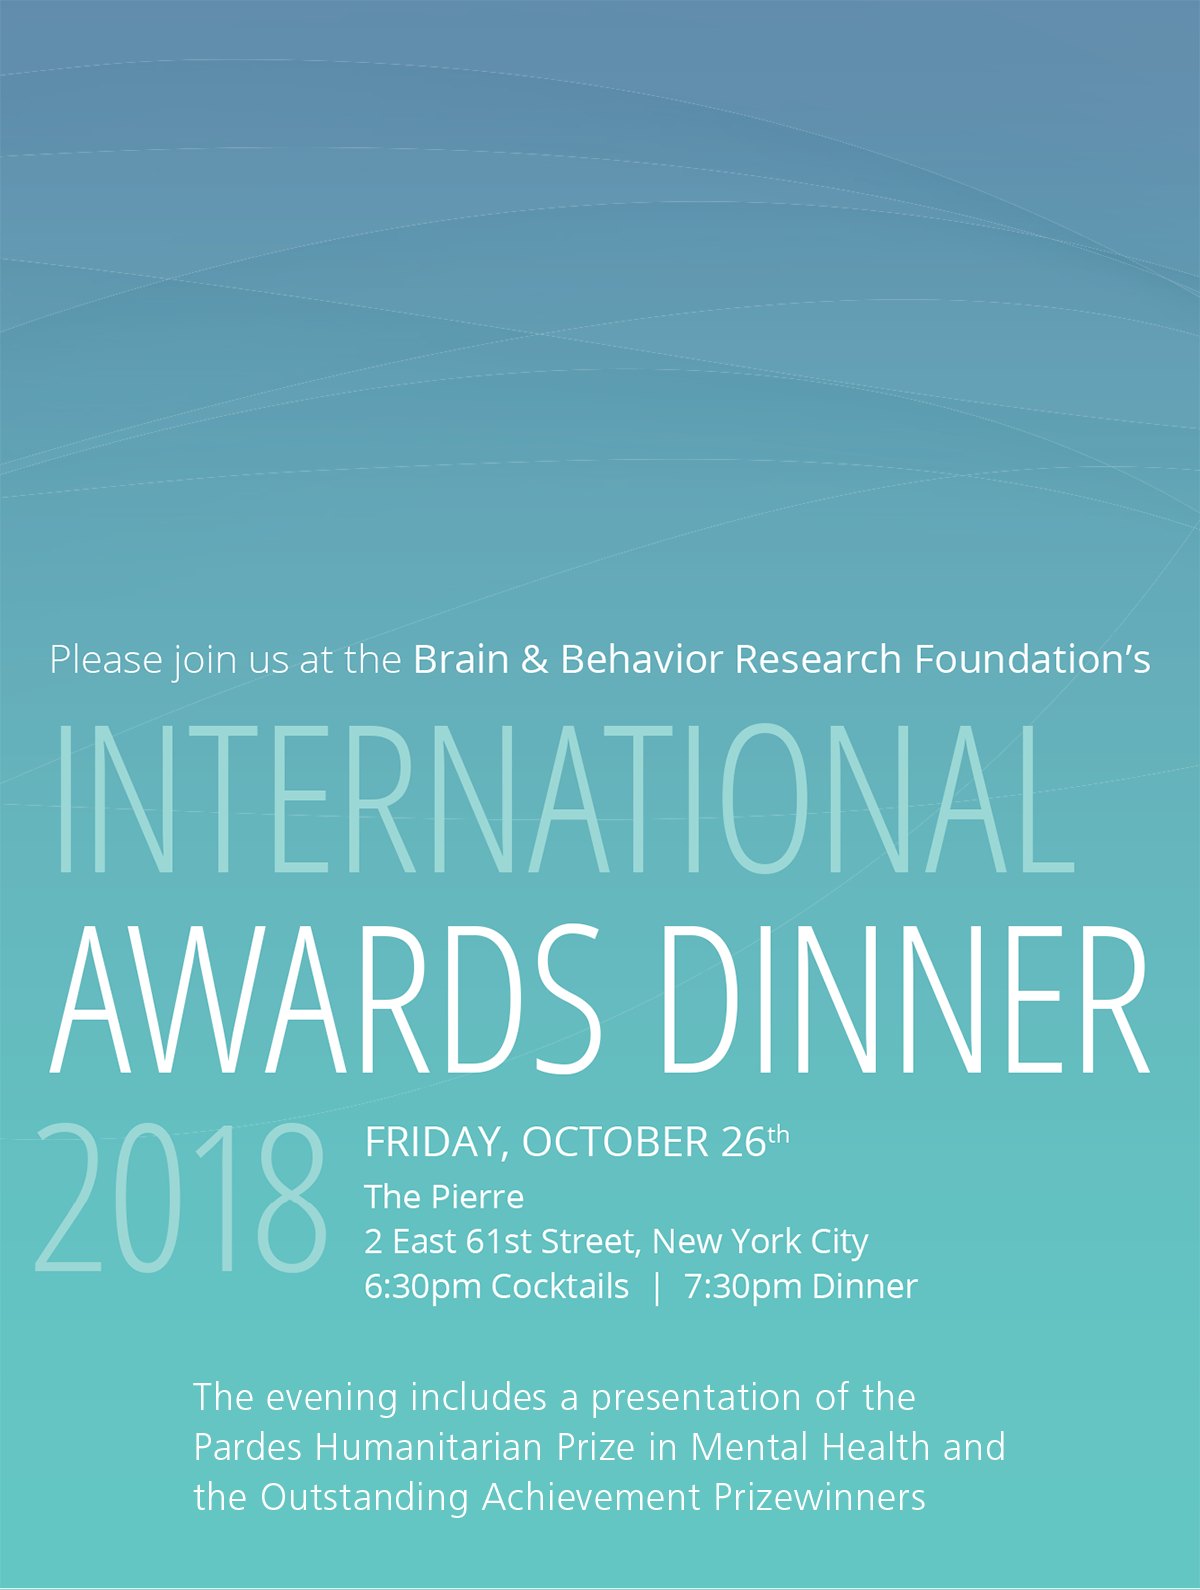 International Awards Dinner 2018
